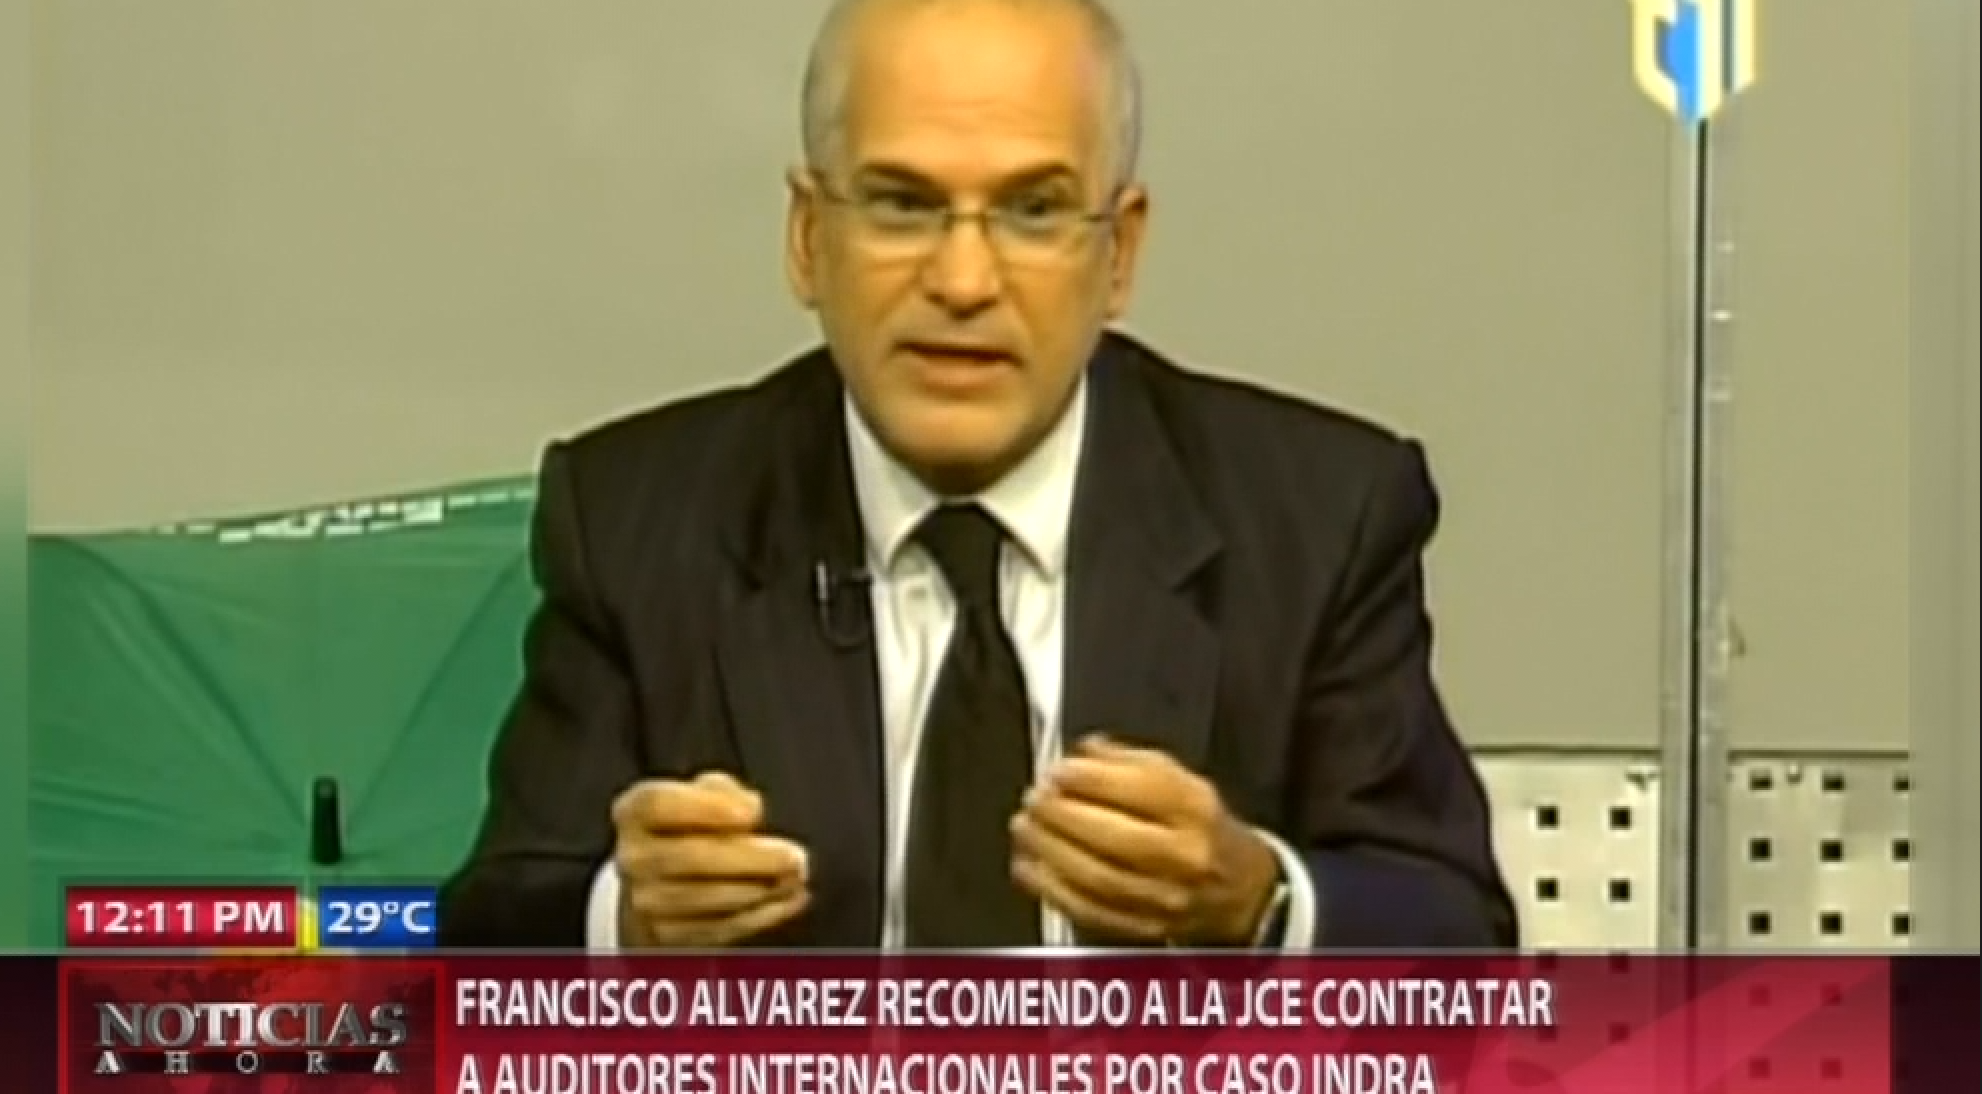 Francisco Alvarez Recomendó A La JCE Contratar A Auditores Internacionales Por Caso INDRHA